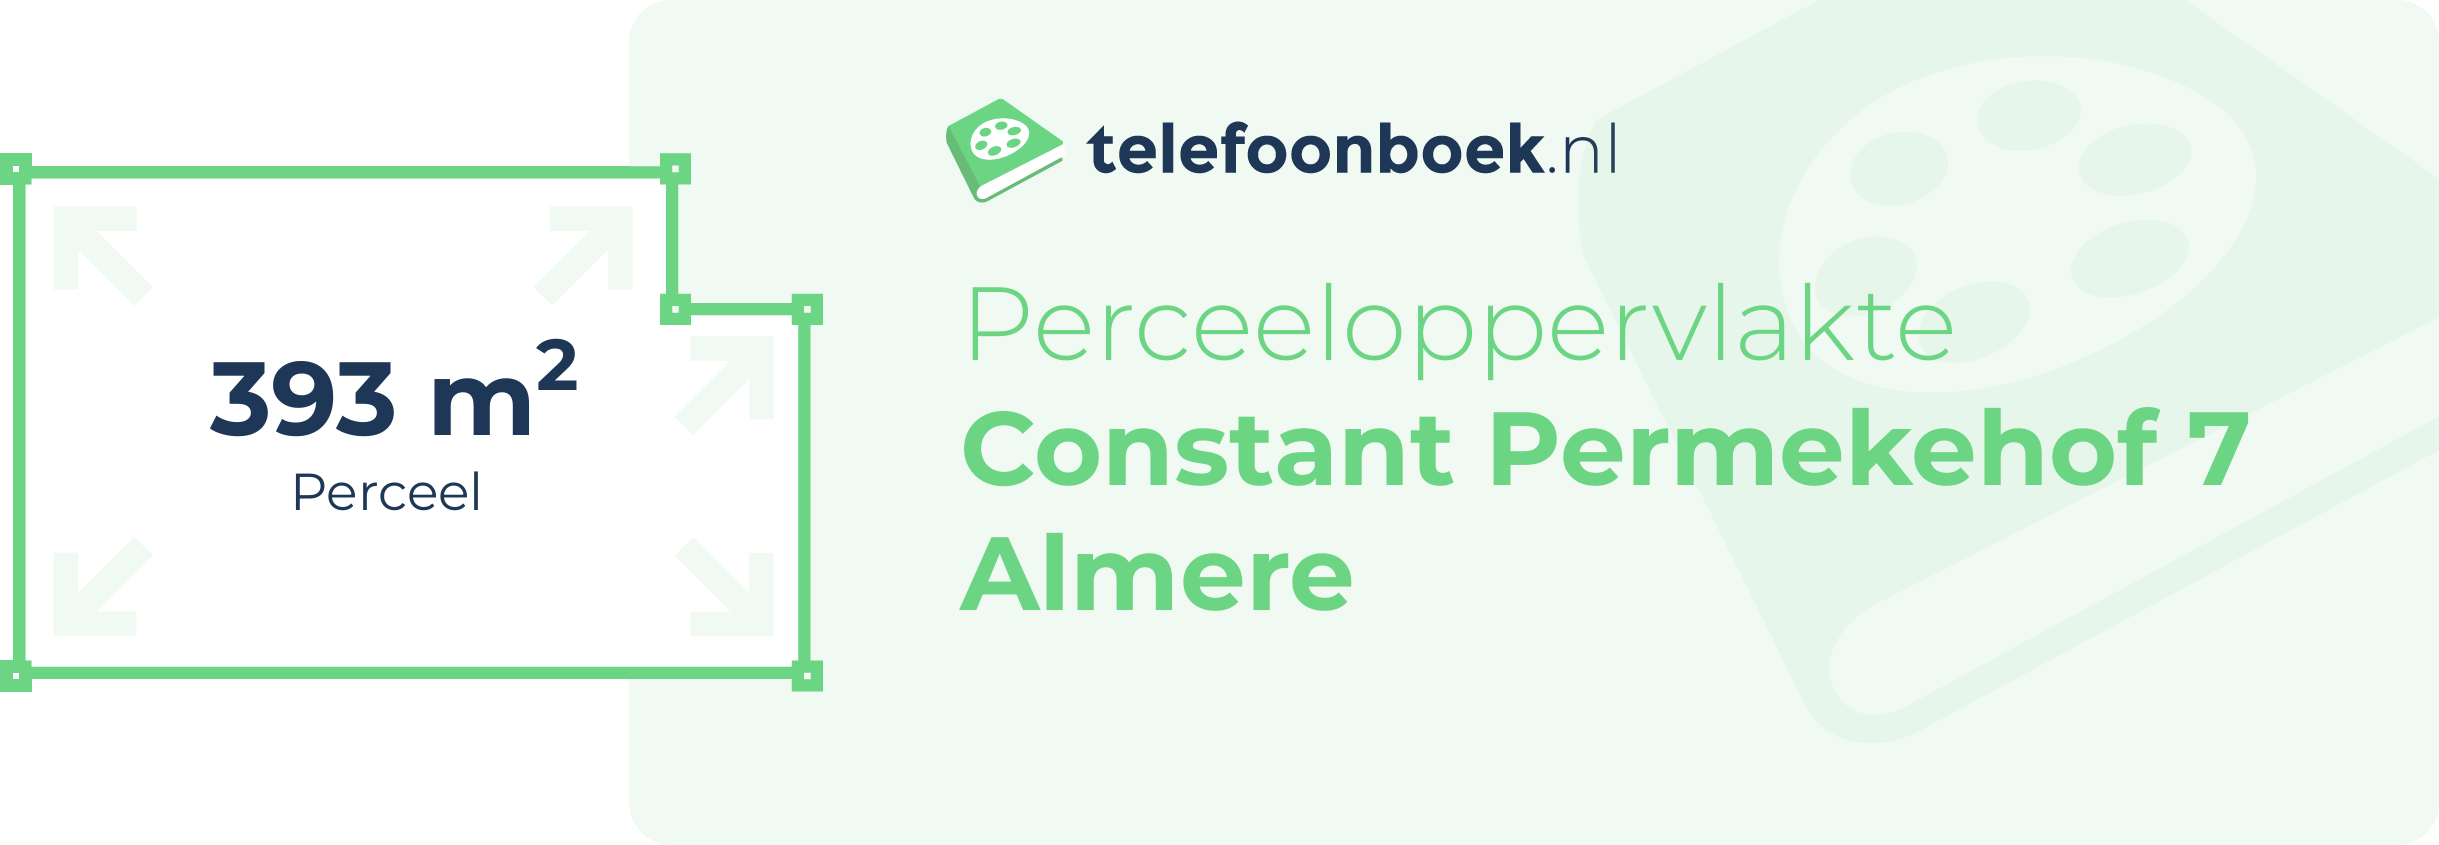 Perceeloppervlakte Constant Permekehof 7 Almere